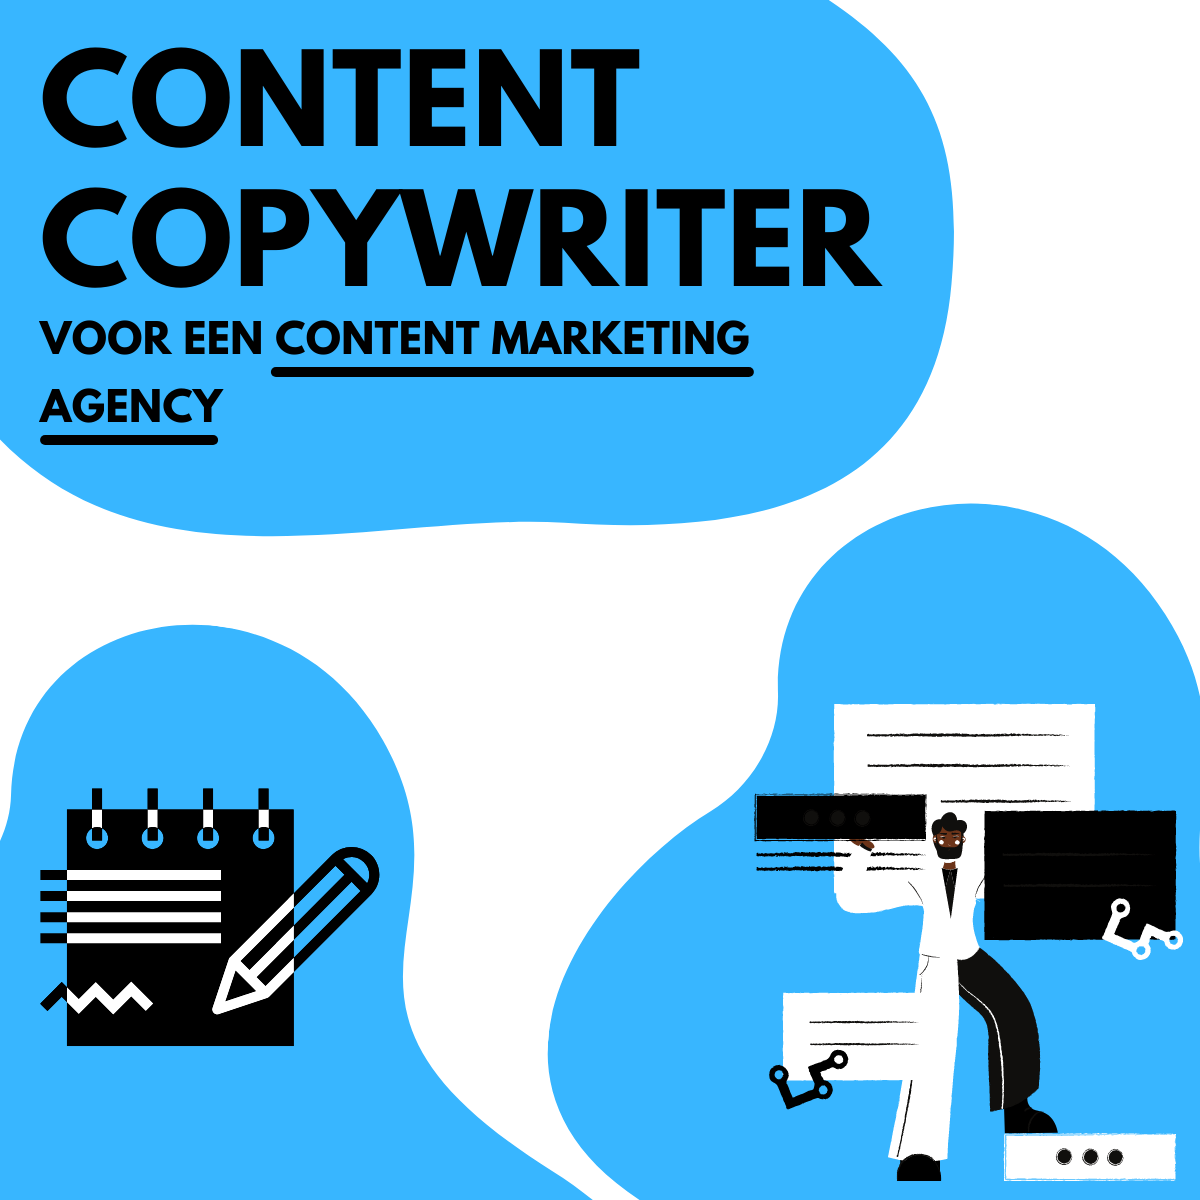 Content copywriter